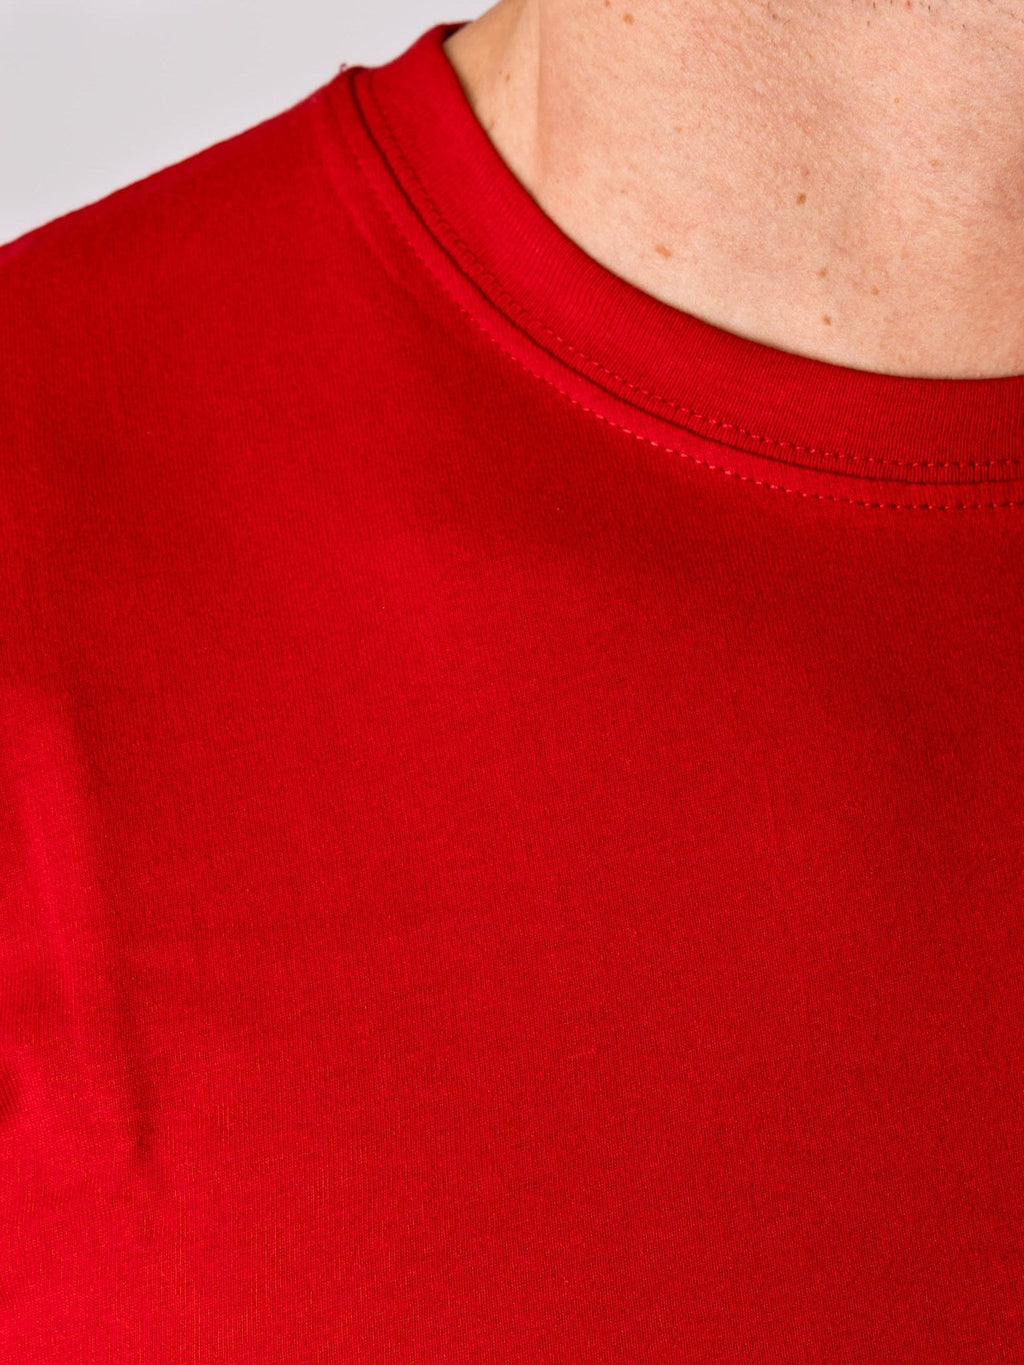 Bio -Basis -T -Shirt - Rot